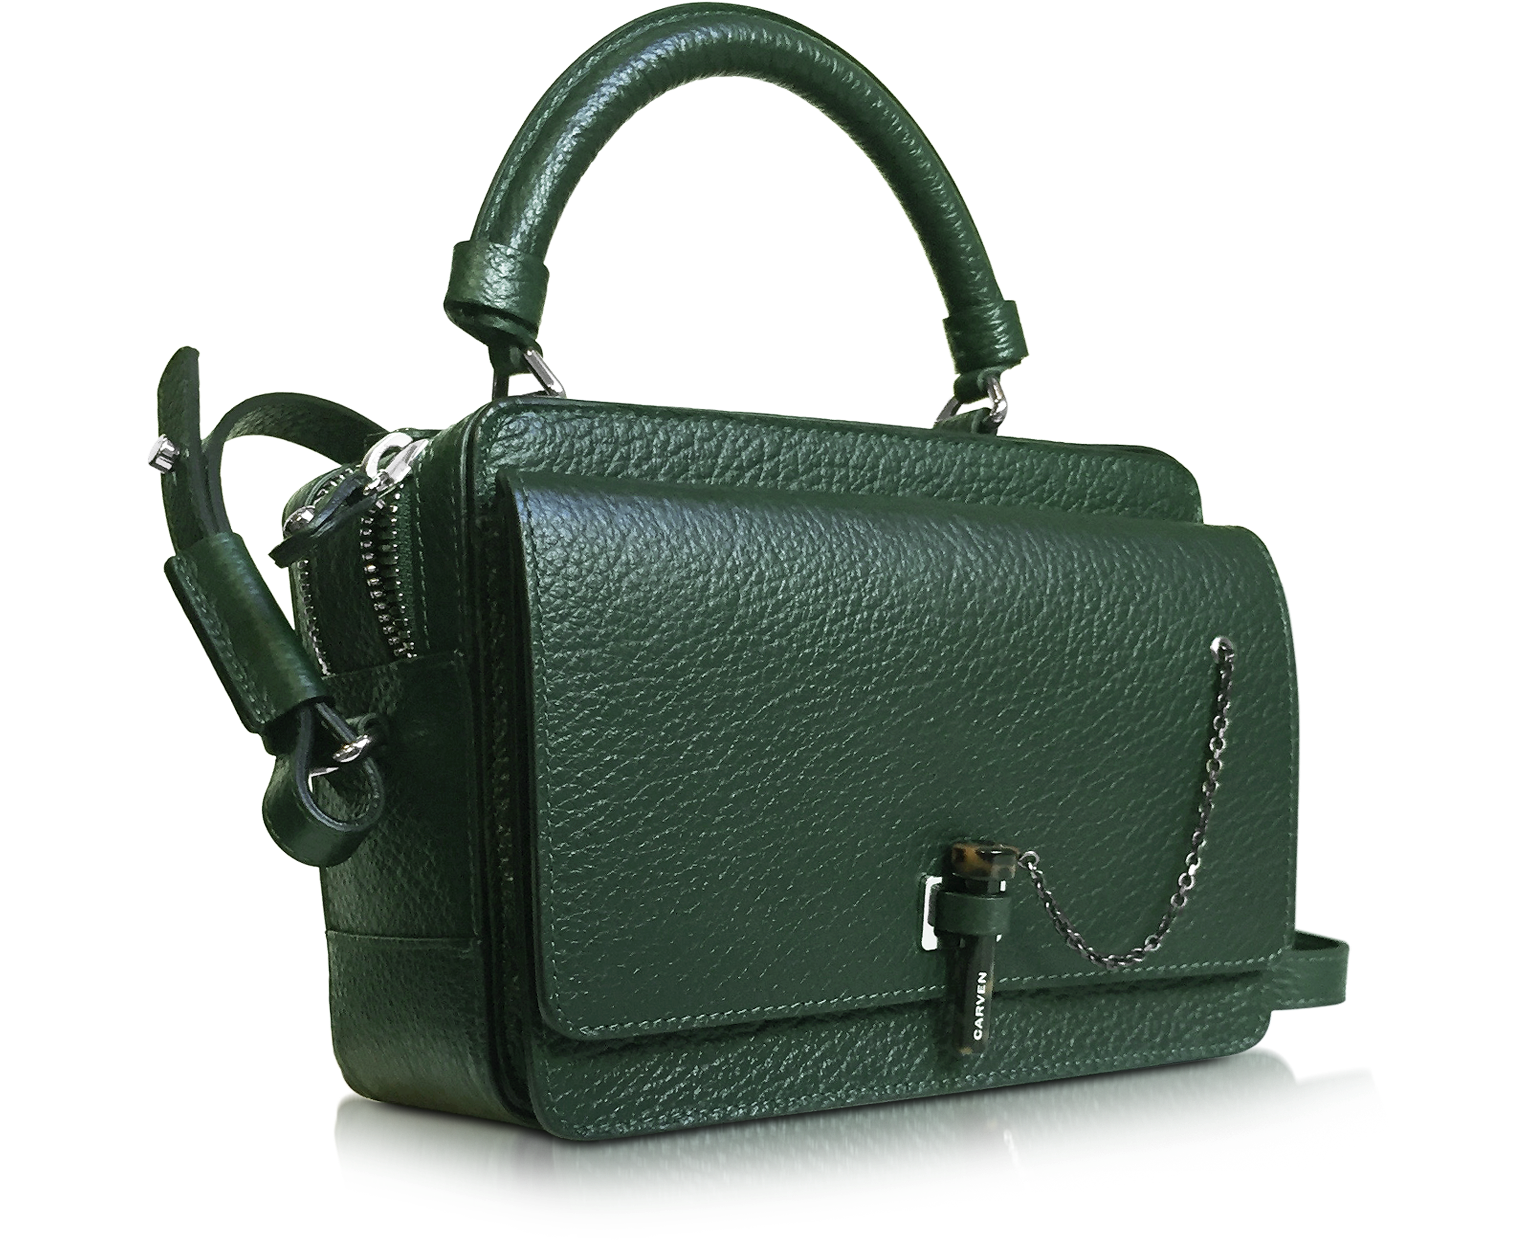 Carven Malher Petit Dark Green Leather Camera Bag at FORZIERI